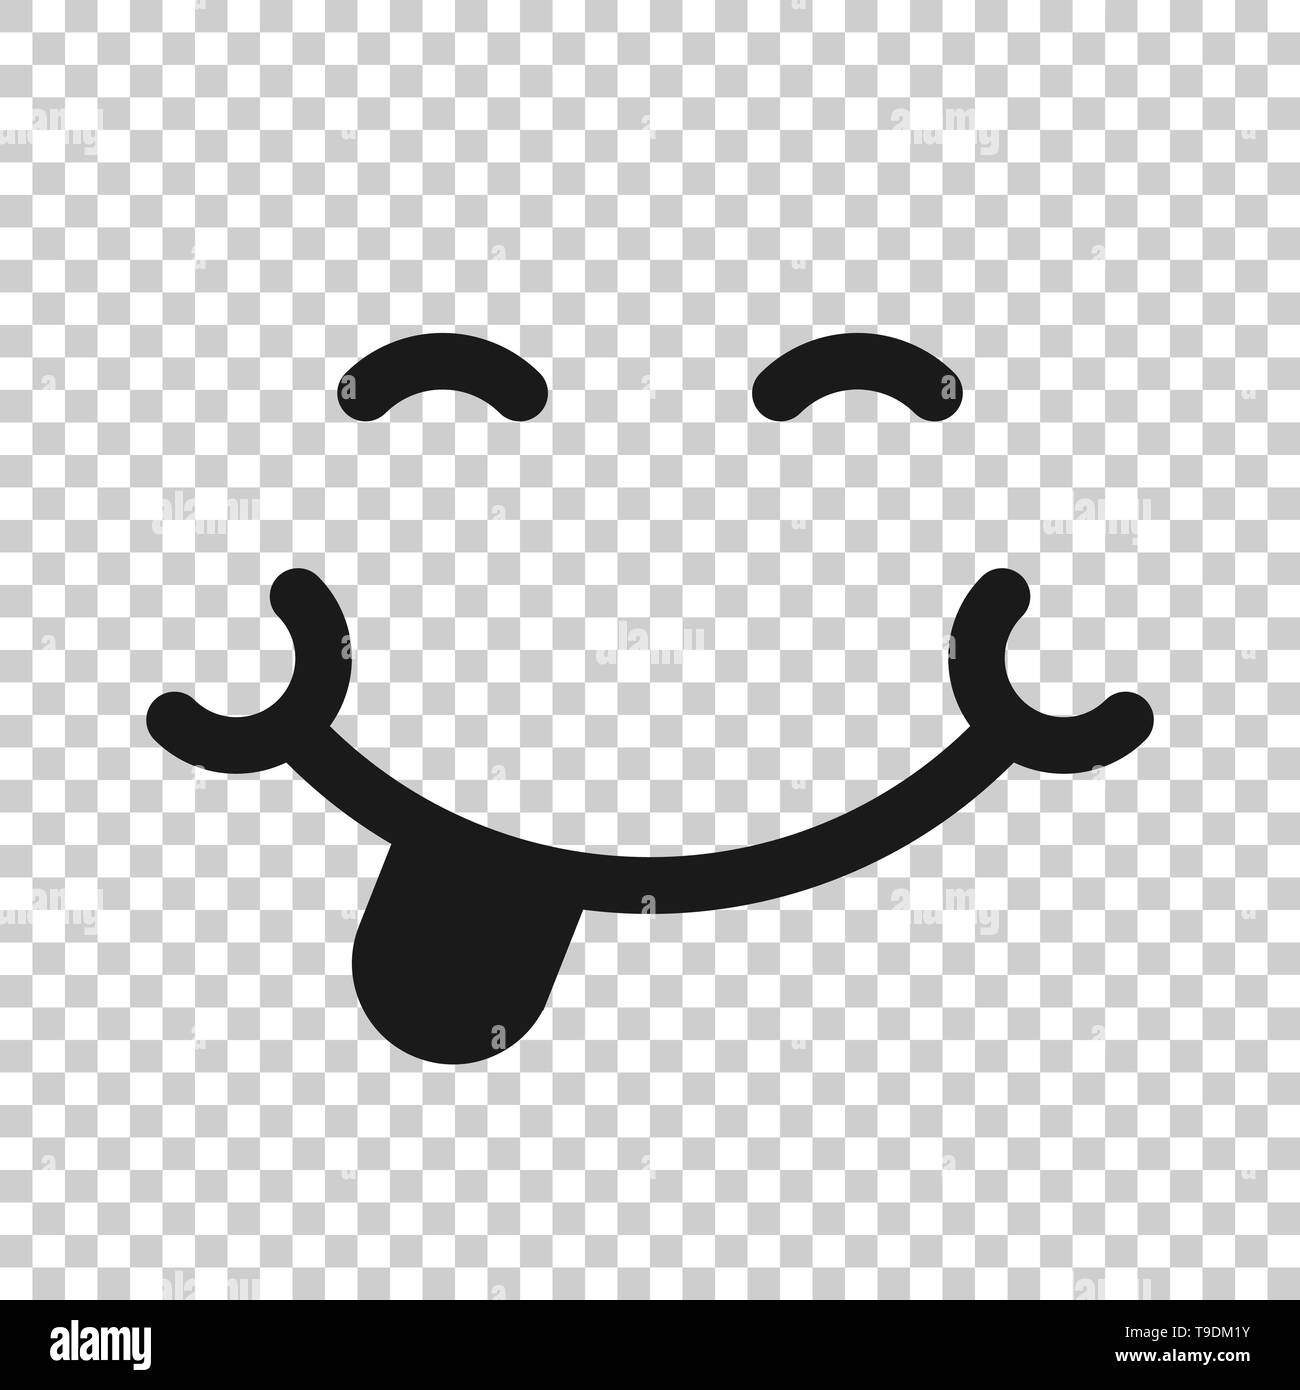 Emoticons Smug Vector Images (over 290)